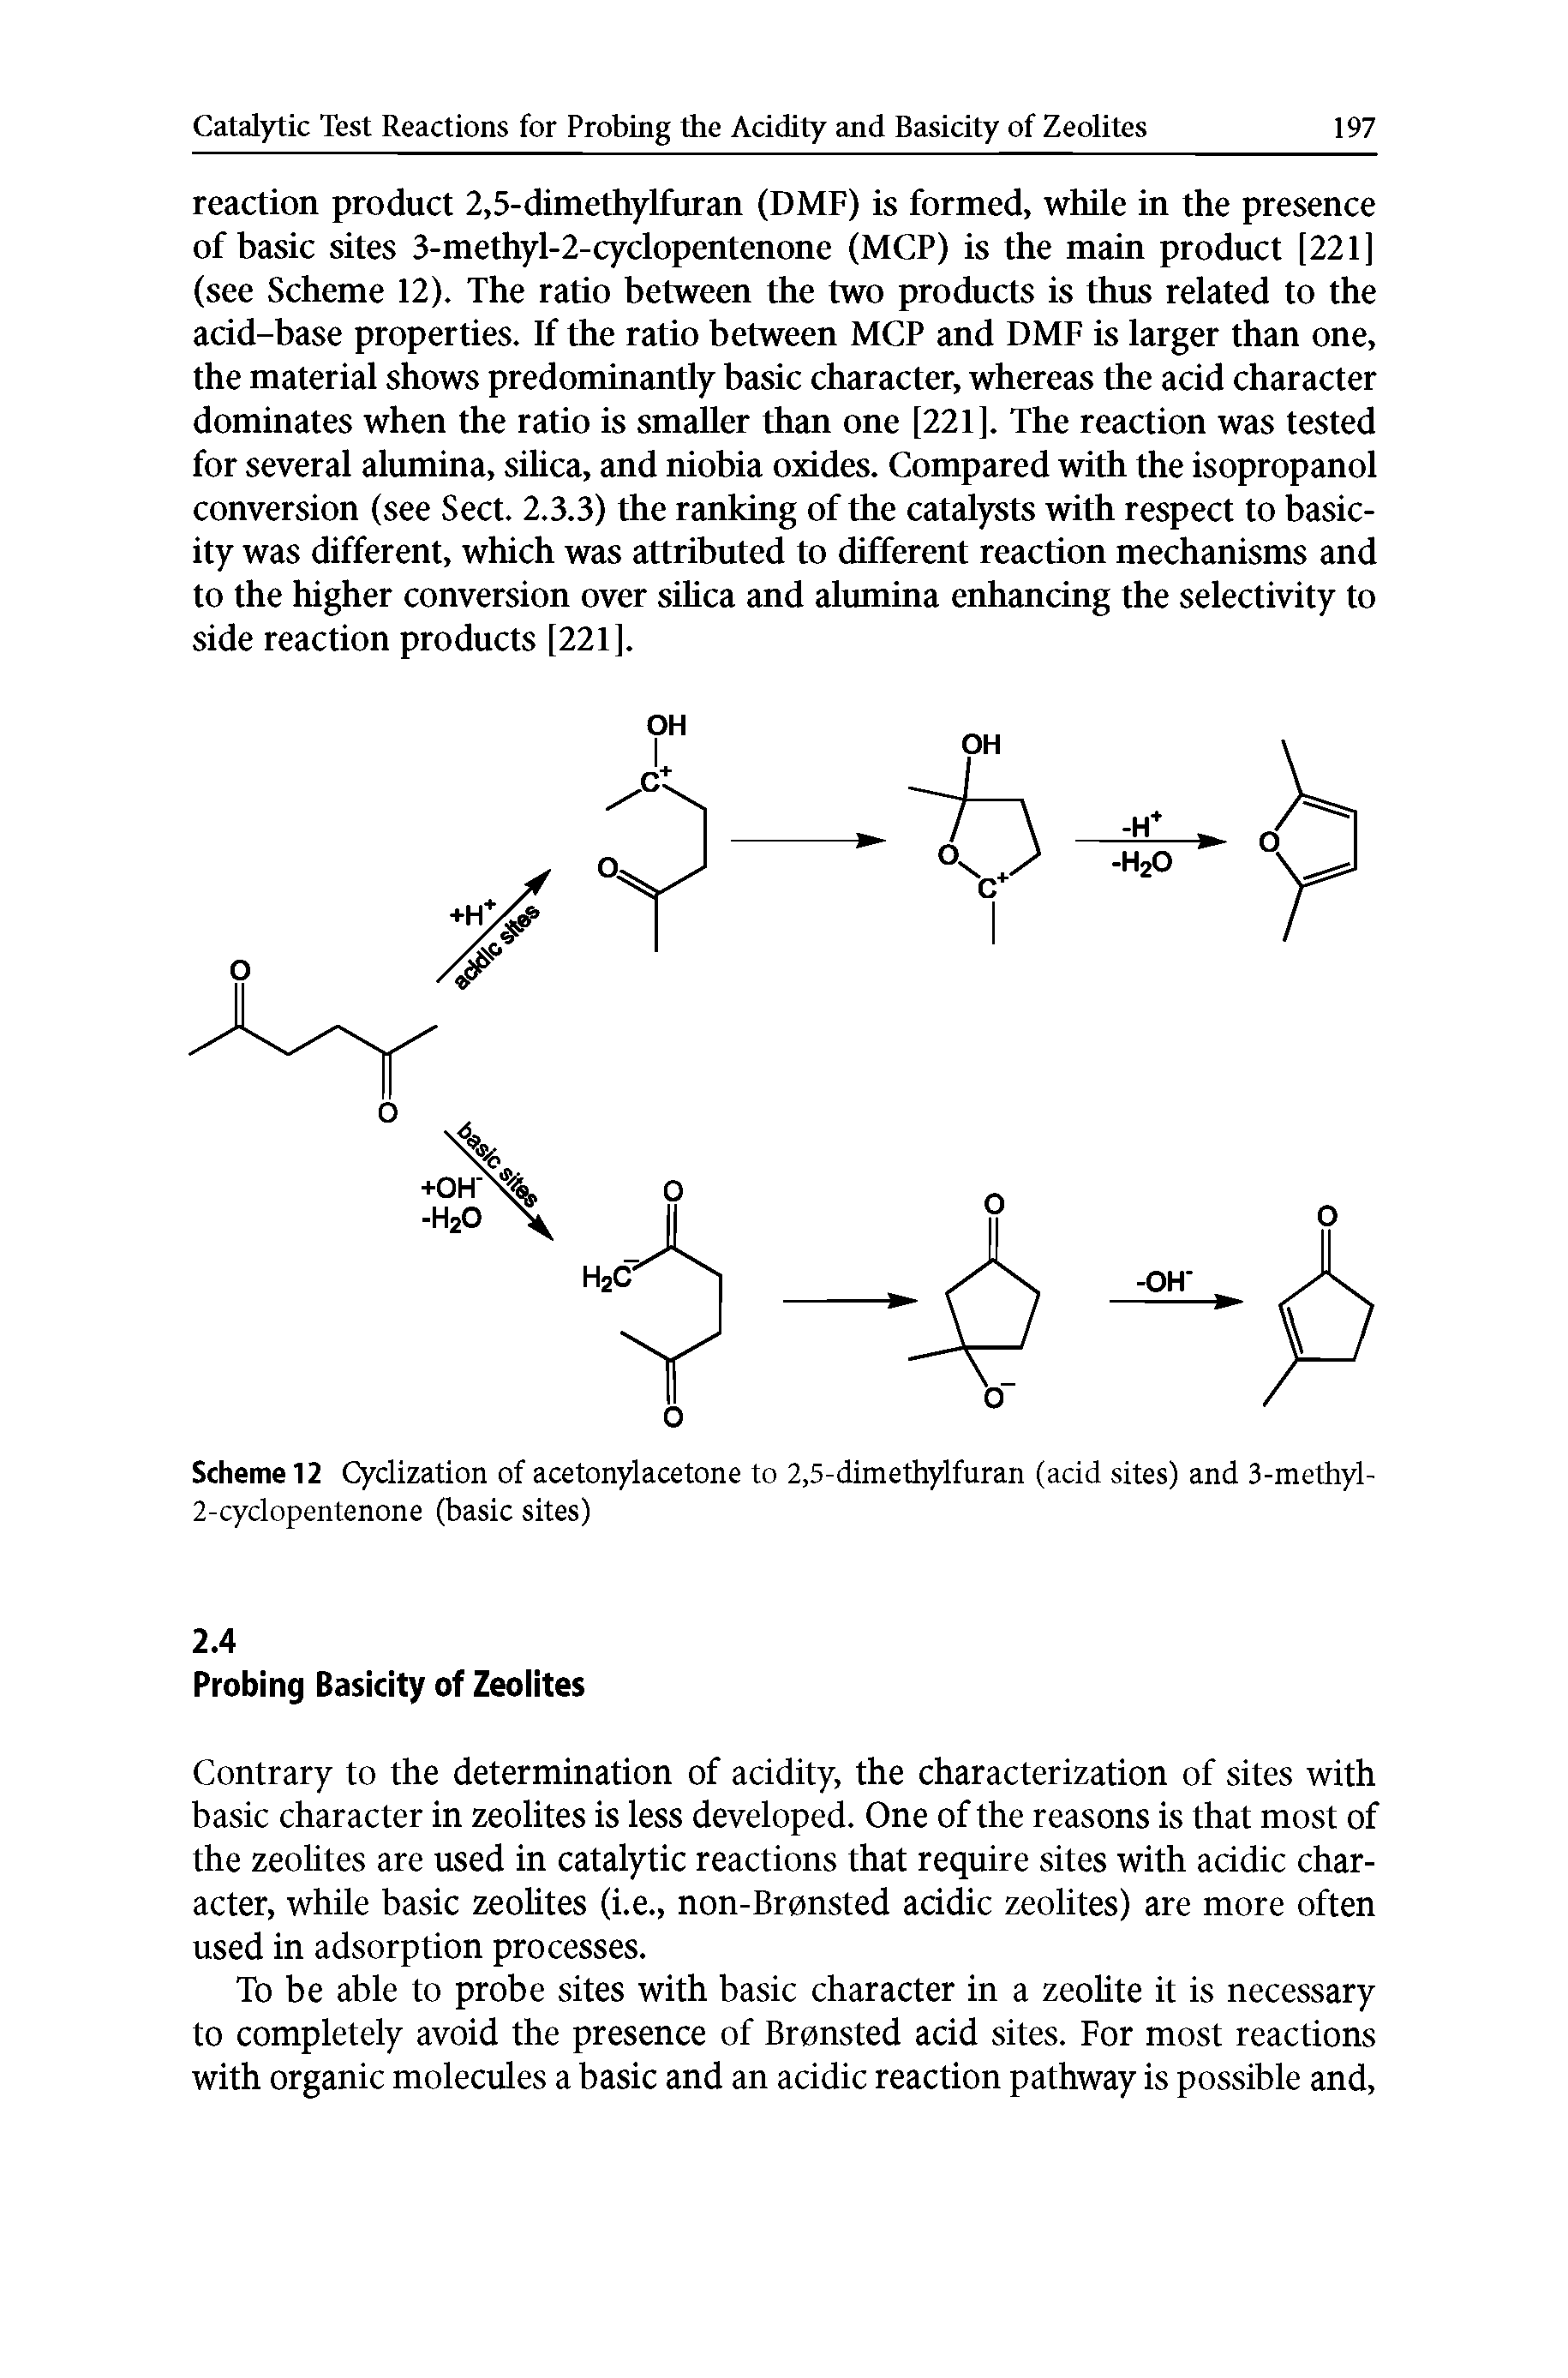 Scheme 12 Cyclization of acetonylacetone to 2,5-dimethylfuran (acid sites) and 3-methyl-2-cyclopentenone (basic sites)...